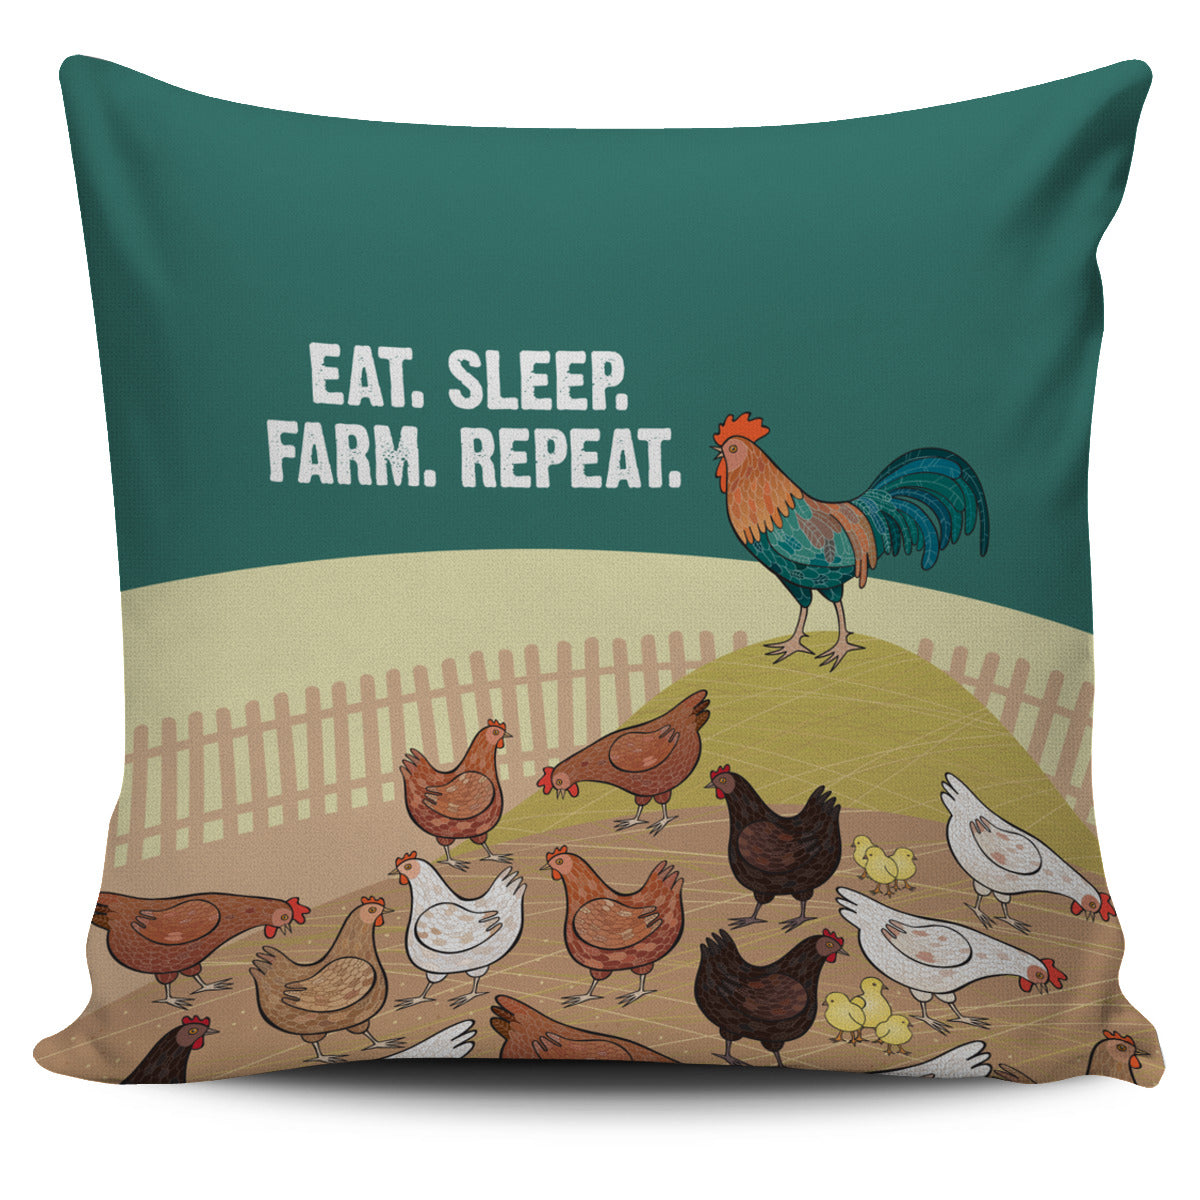 Farm Repeat Pillow Cover